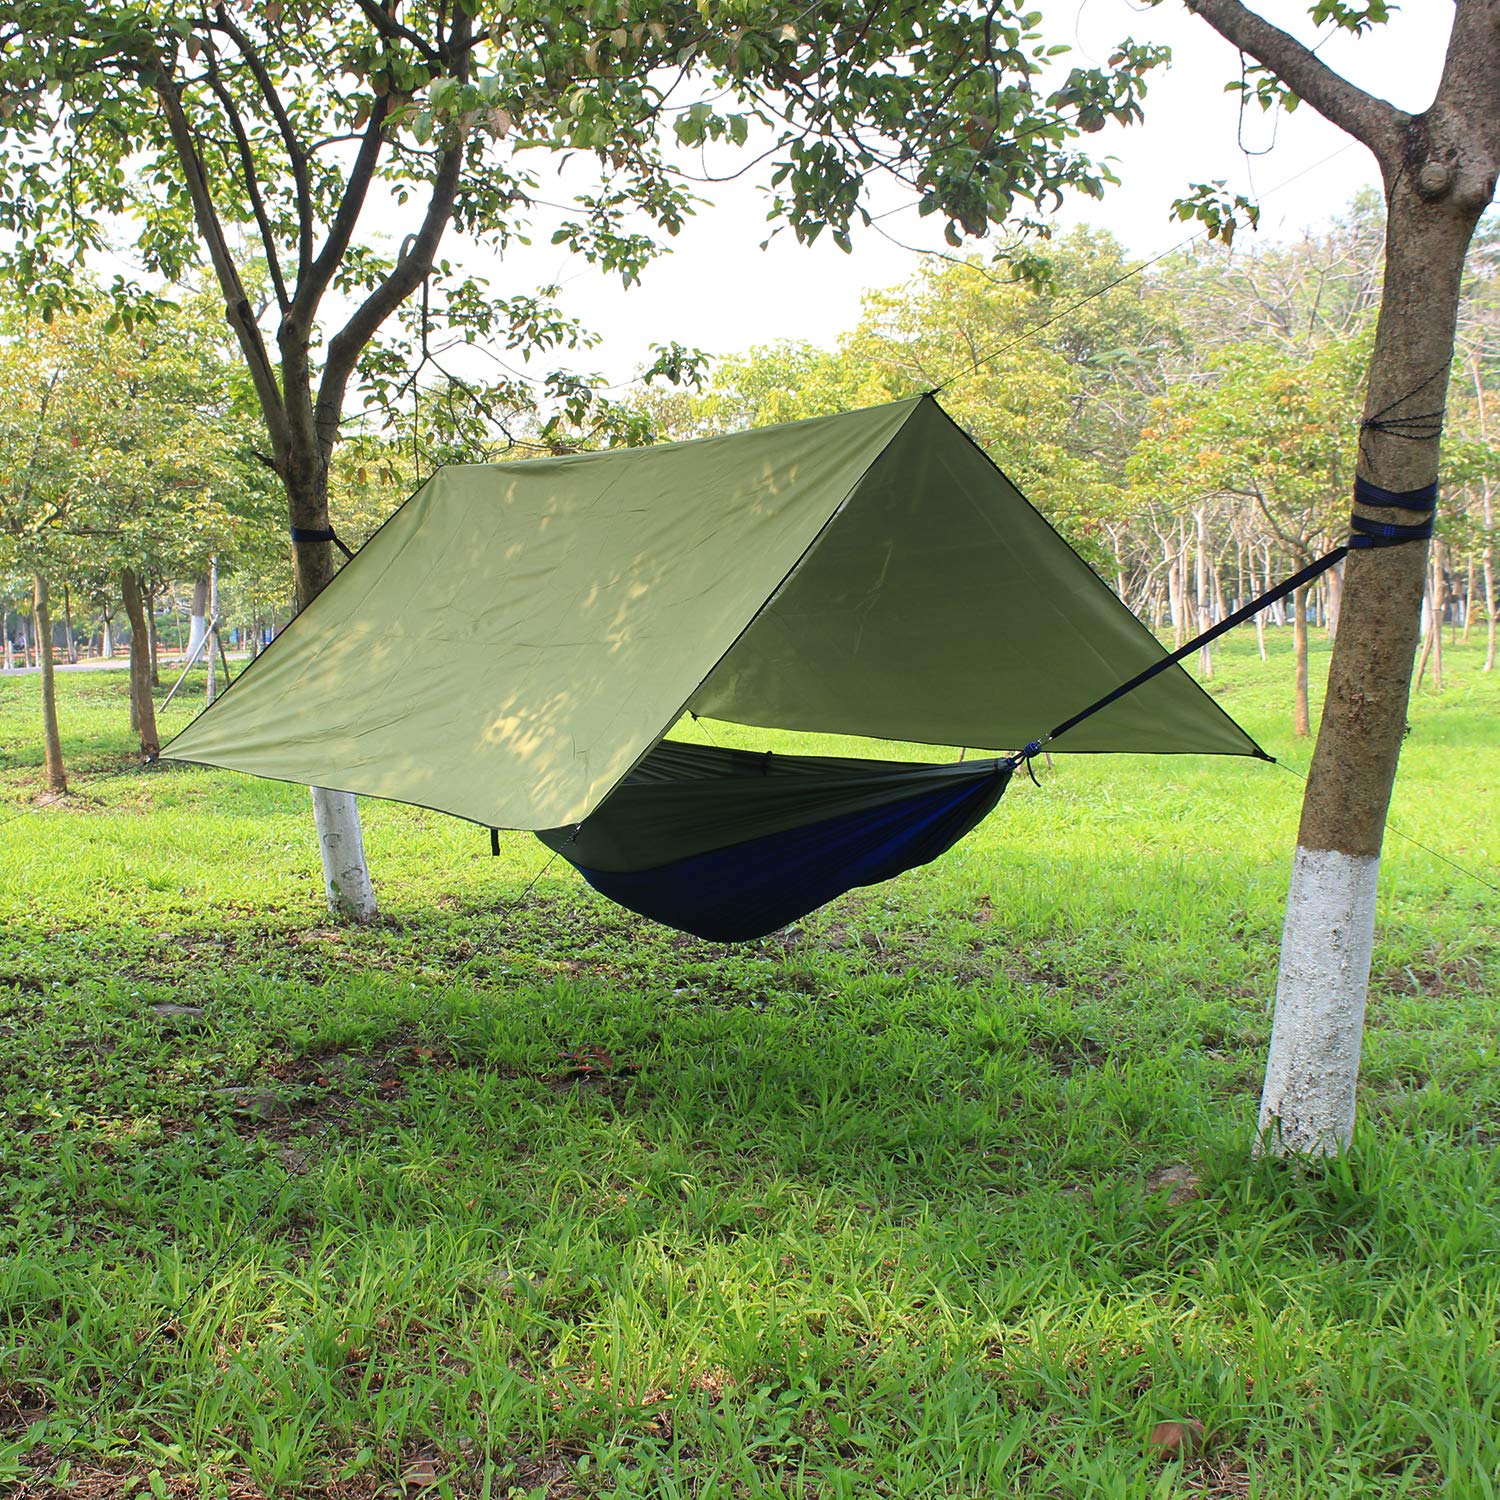 Esup 10 x 10 ft Hammock Rain Fly Lightweight Windproof Tent Tarp, 210T Ripstop Nylon Material, Camping, Hiking Essential Gear, (Green)